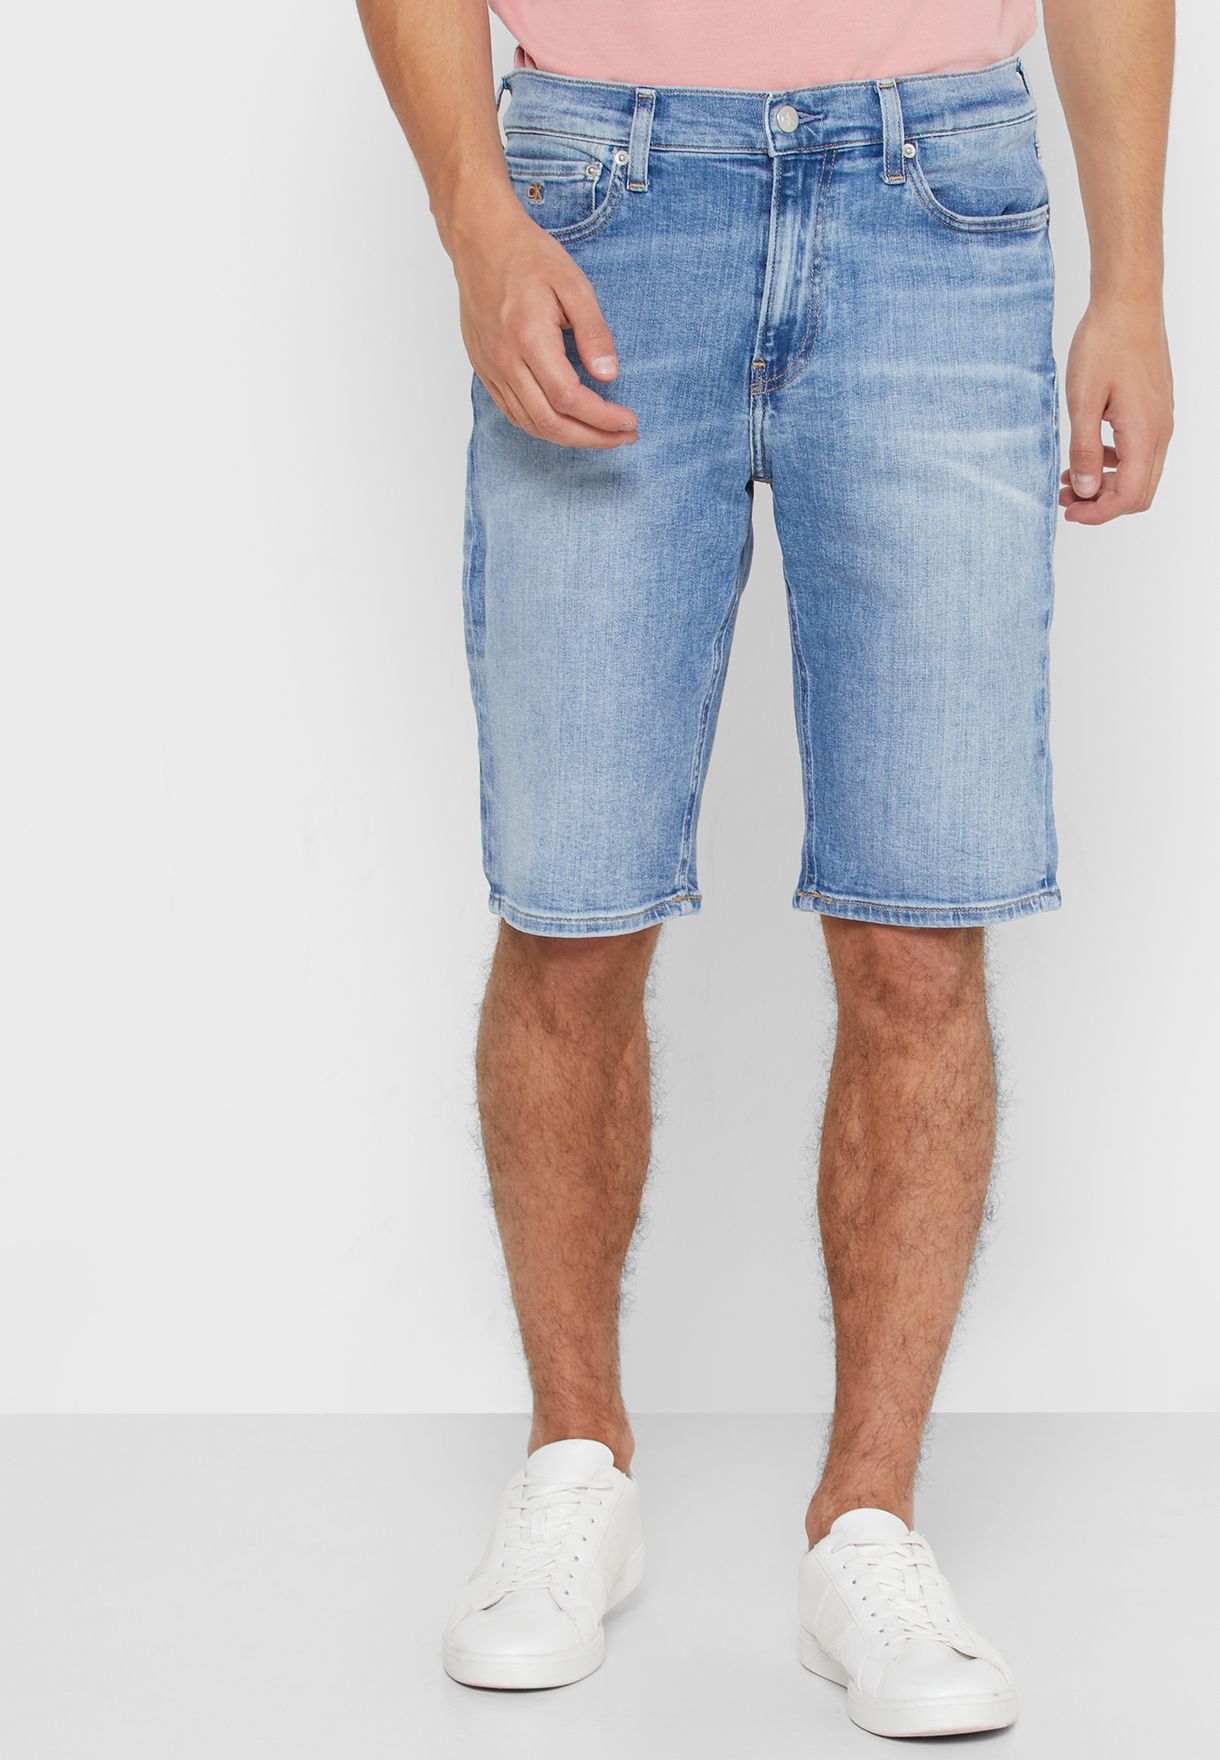 grey jeans shorts